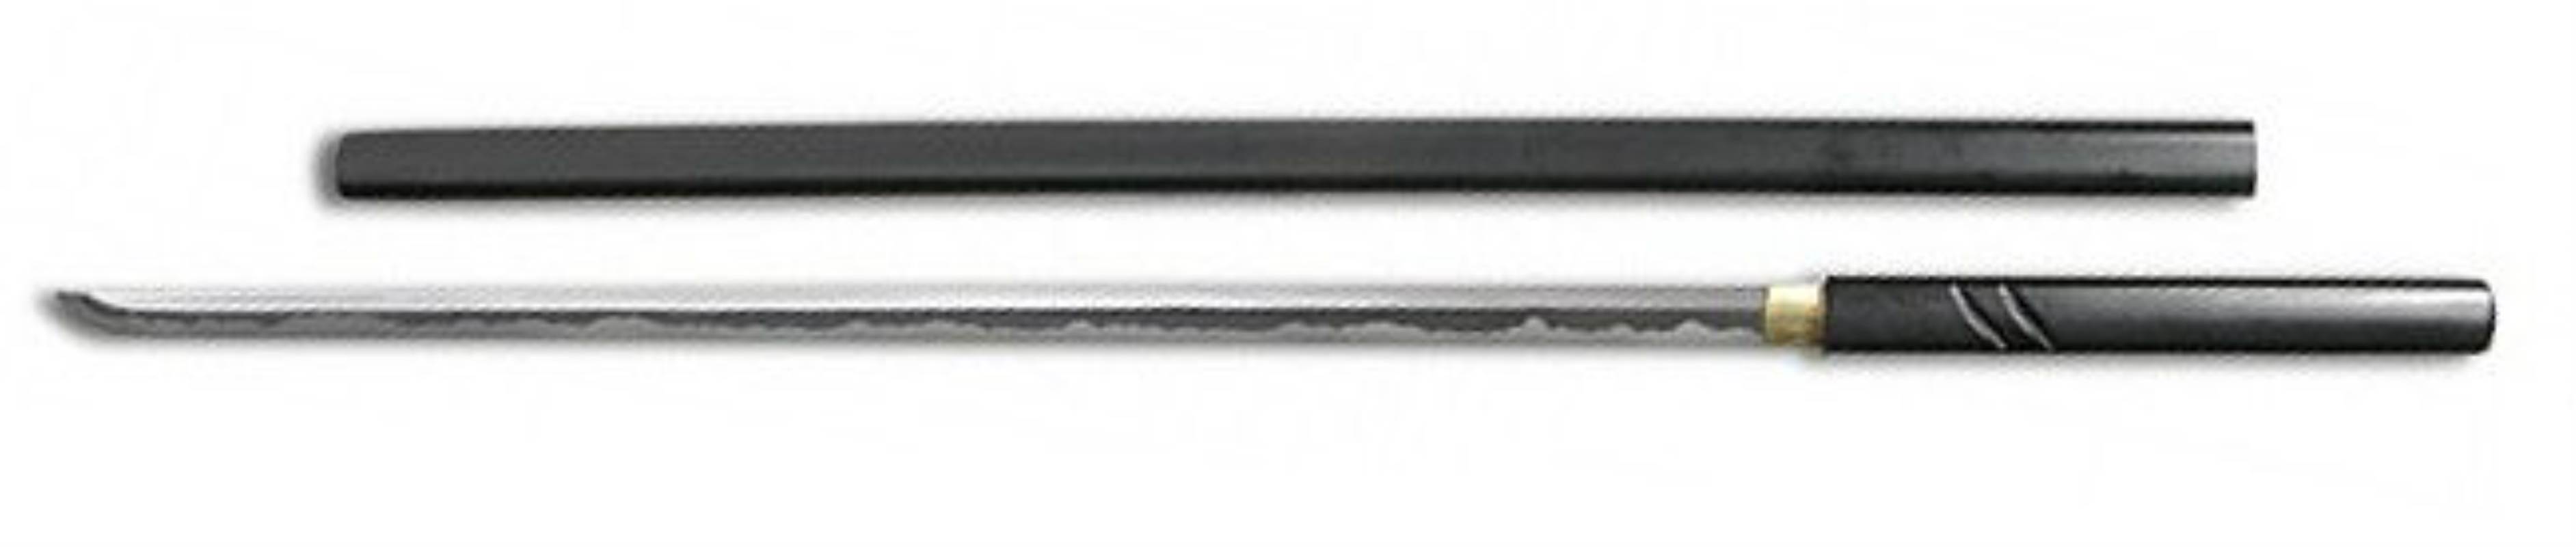 Zatoichi Sword  Blind Fury Zatoichi Stick/Cane Sword With Red Scabbard -  TrueKatana